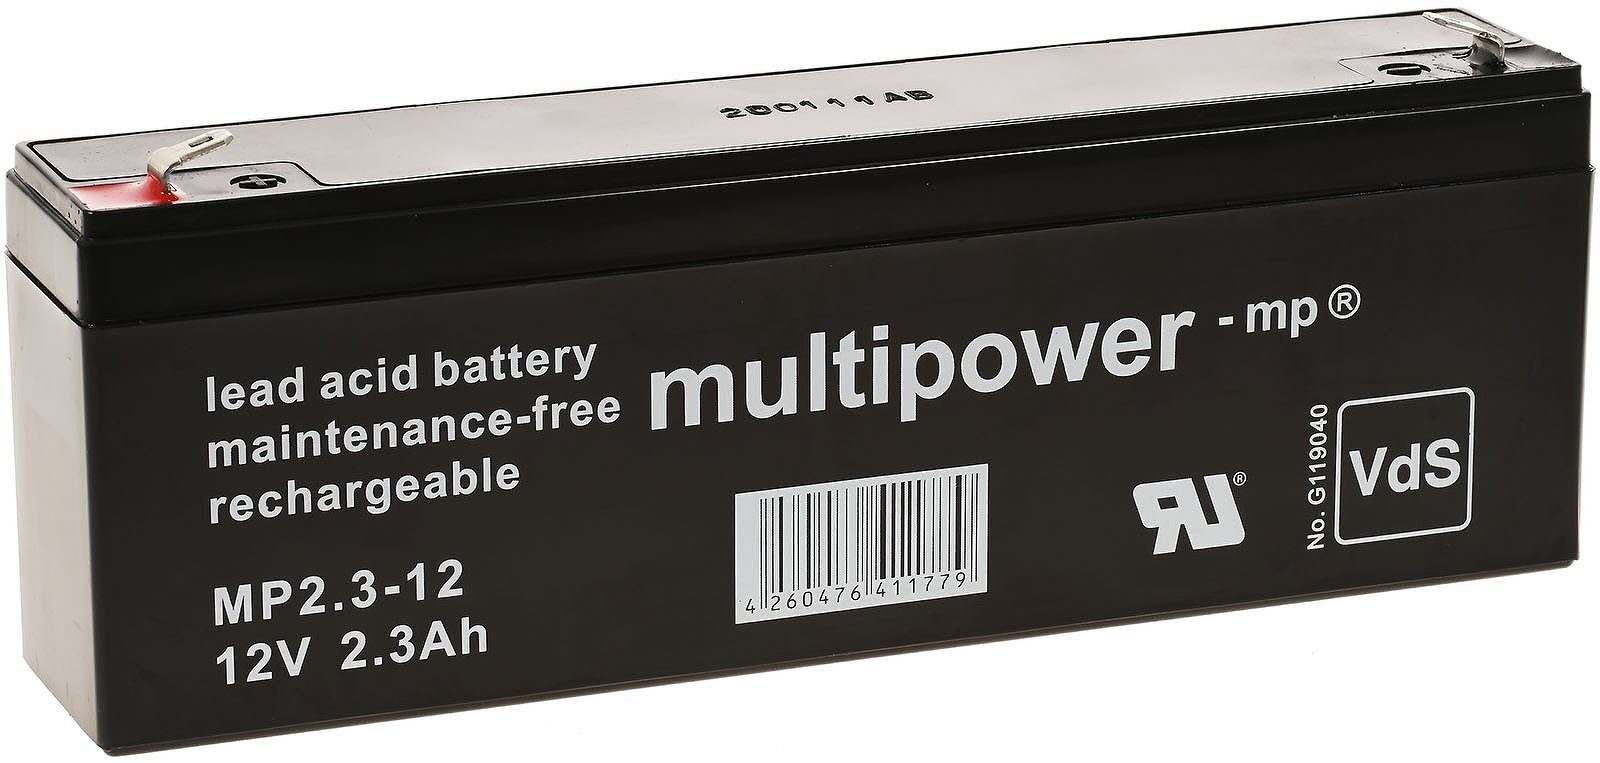 Bleiakkus MP2.2-12 (multipower) V) Vds Powery zu Bleiakku kompatibel mAh (12 2300